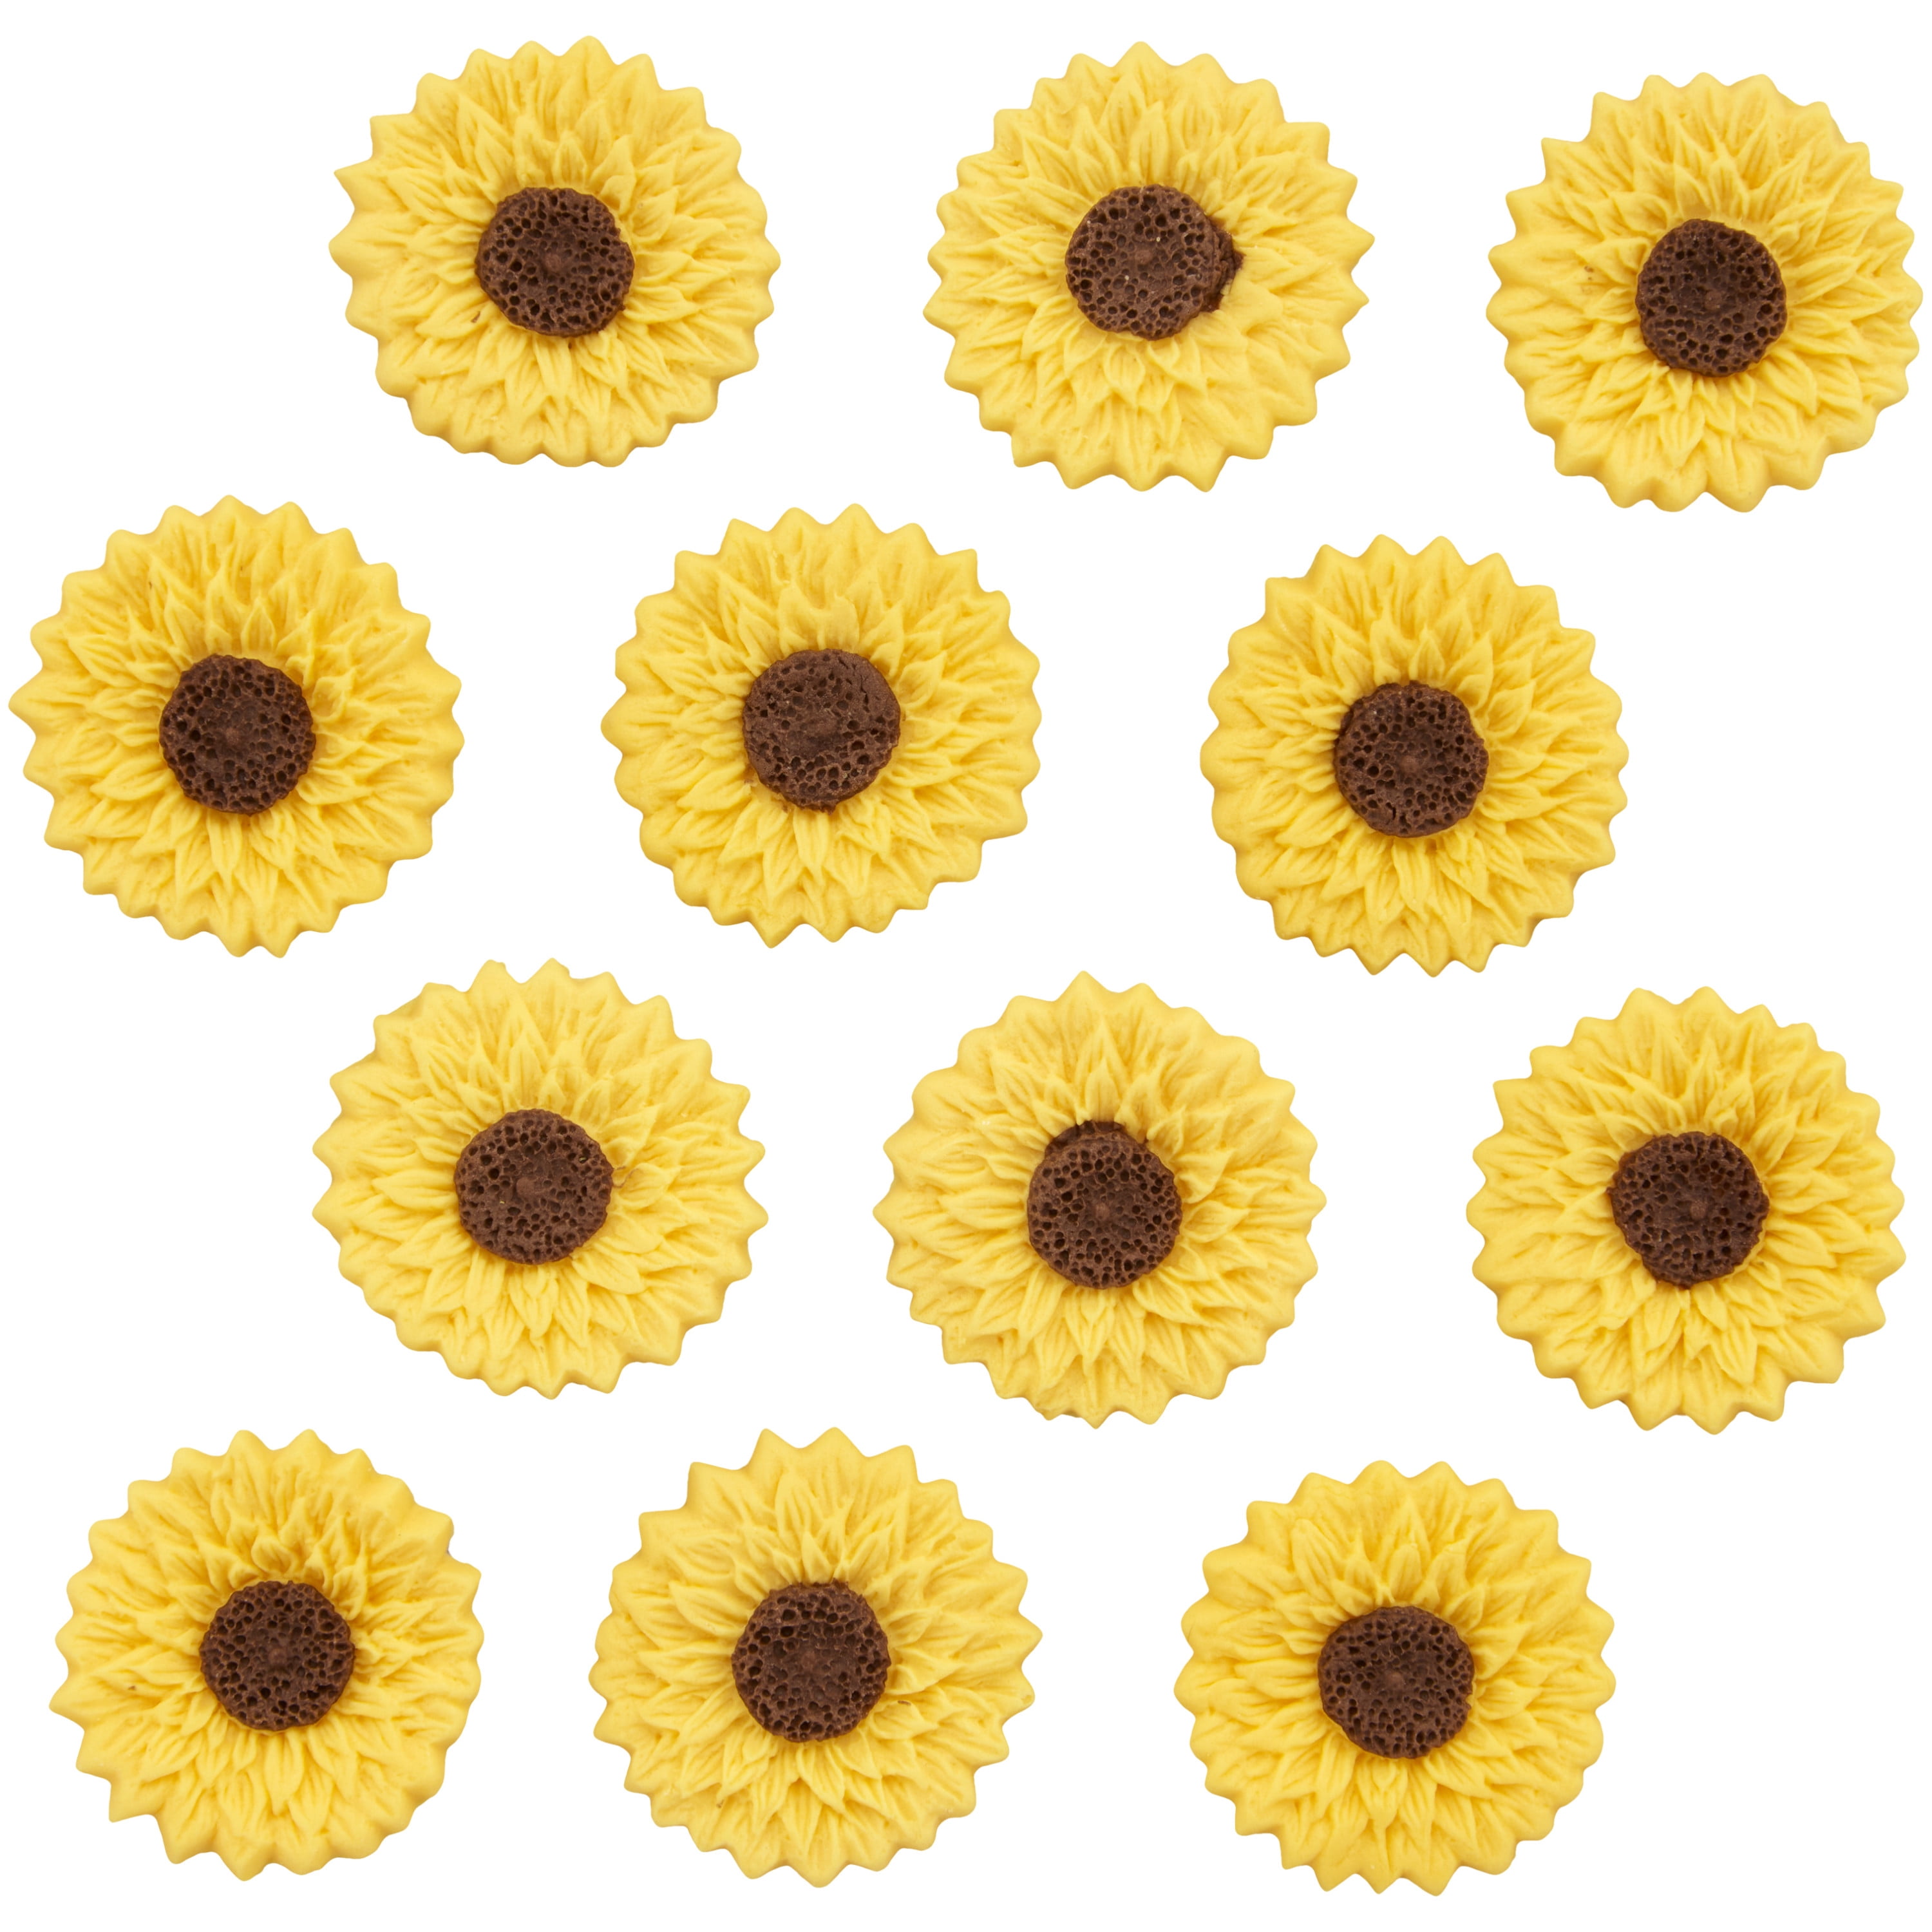 Wilton Sunflower Royal Icing Decorations, 0.63 oz